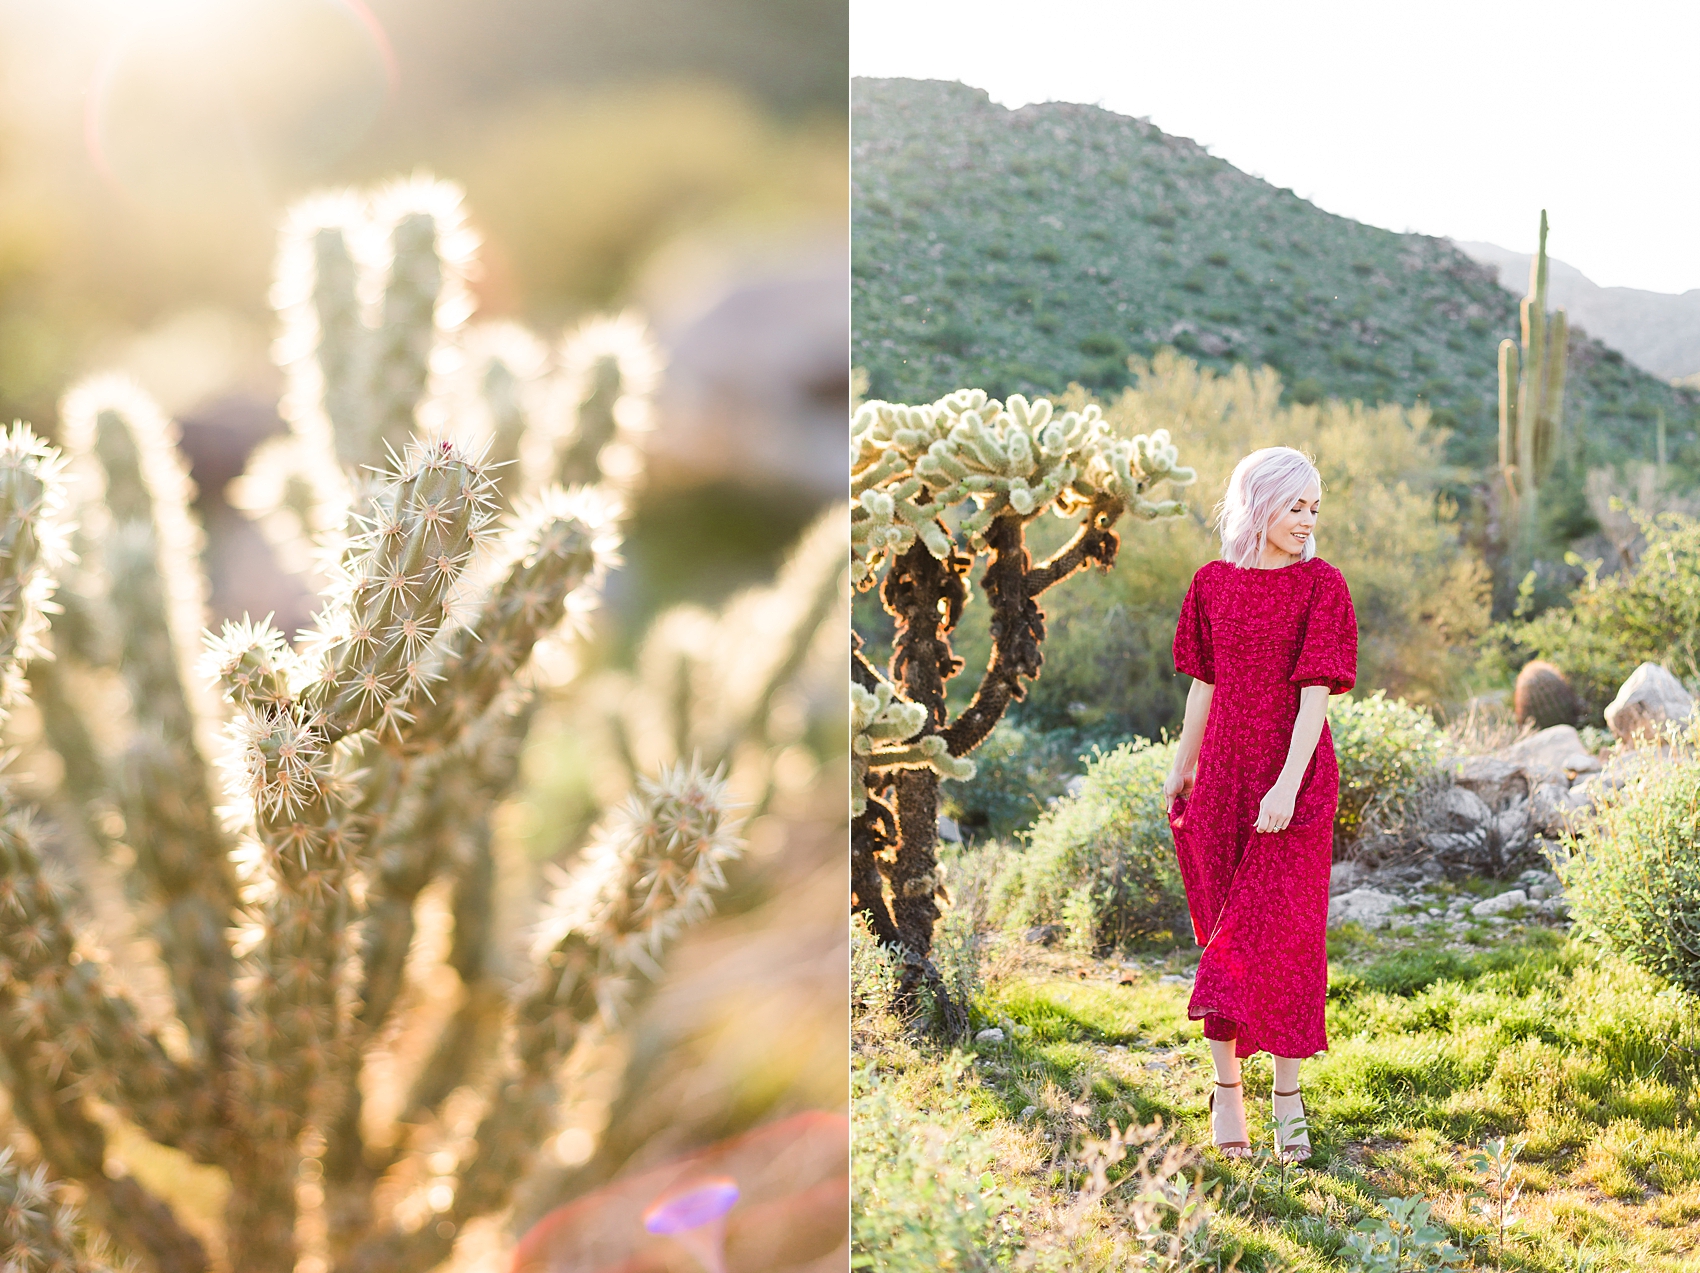 Leah Hope Photography | Scottsdale Phoenix Arizona | Desert Landscape Cactus Scenery | White Tank Mountains Regional Park | Fashion Blogger | Model Pictures | What to Wear Women | Female Portraits 